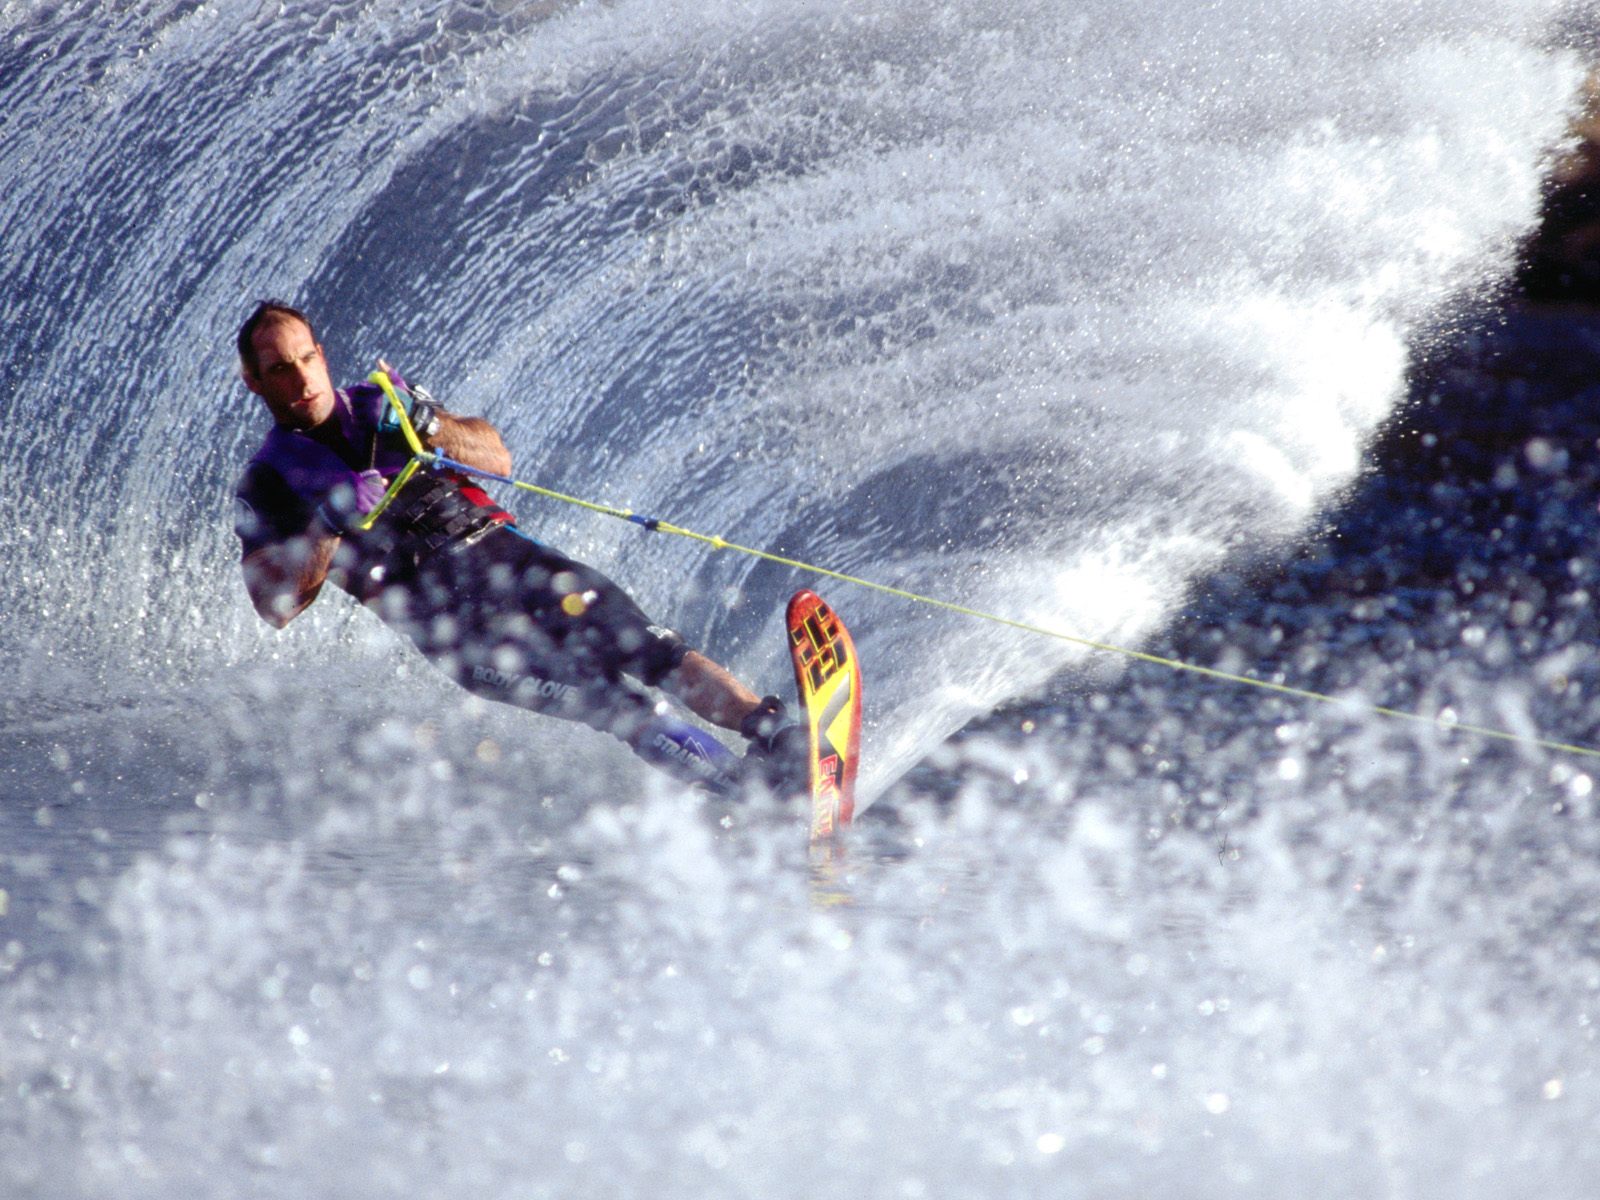 Download Wallpaper usa water oregon wave skiing waterskiing, 1600x Waterskiing at Columbia River, Oregon